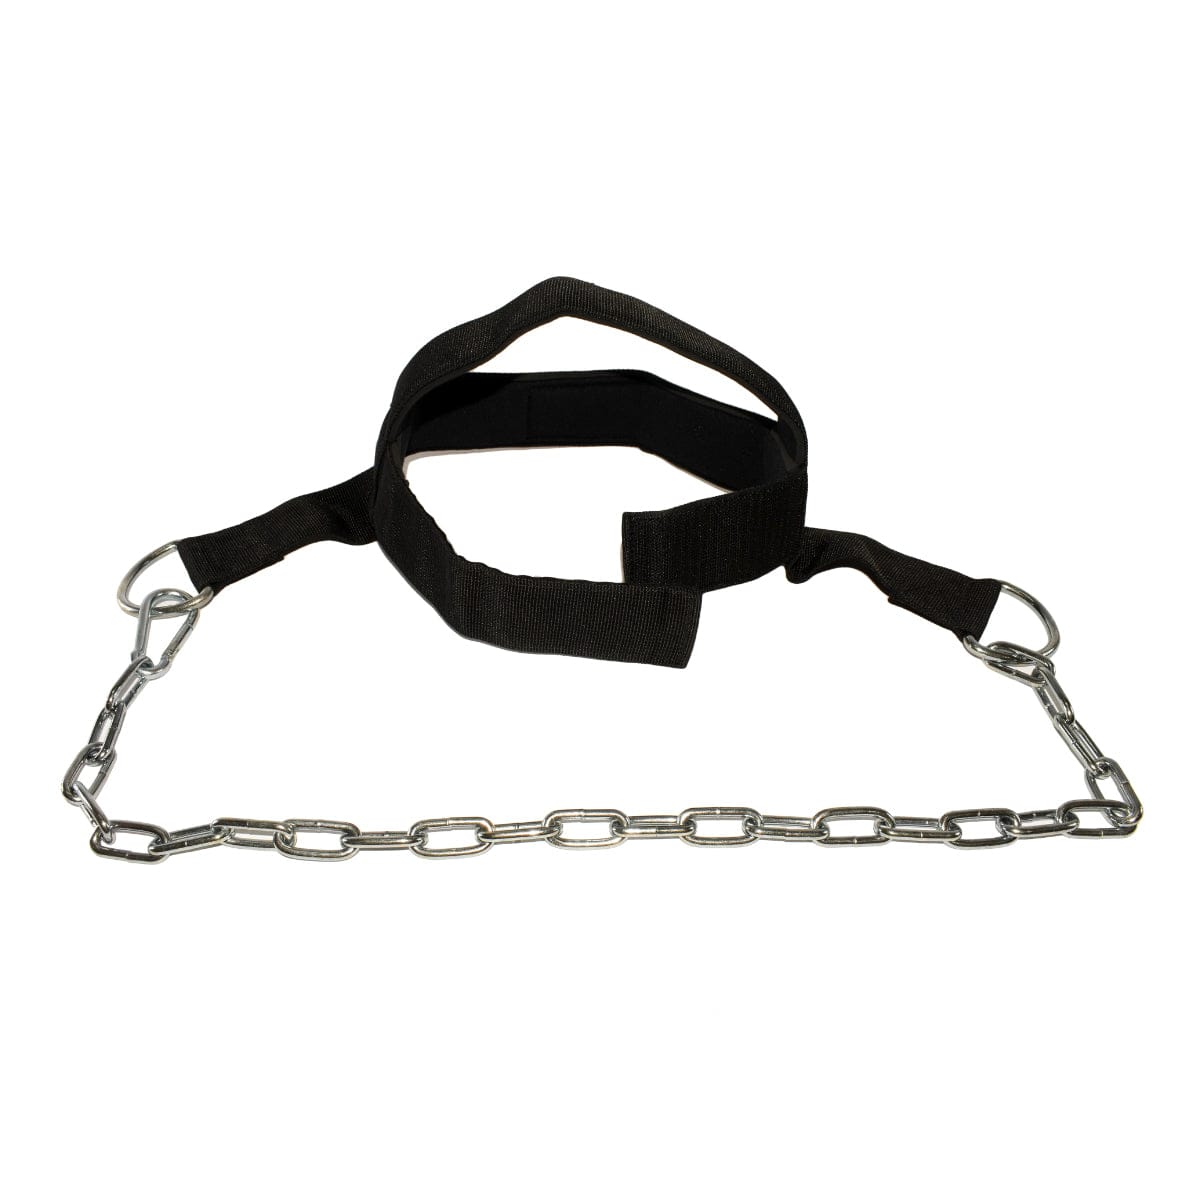 Head Harness Dipping Neck Builder Belt Chain Weight Lifting Cotton Webbing & Cast Iron